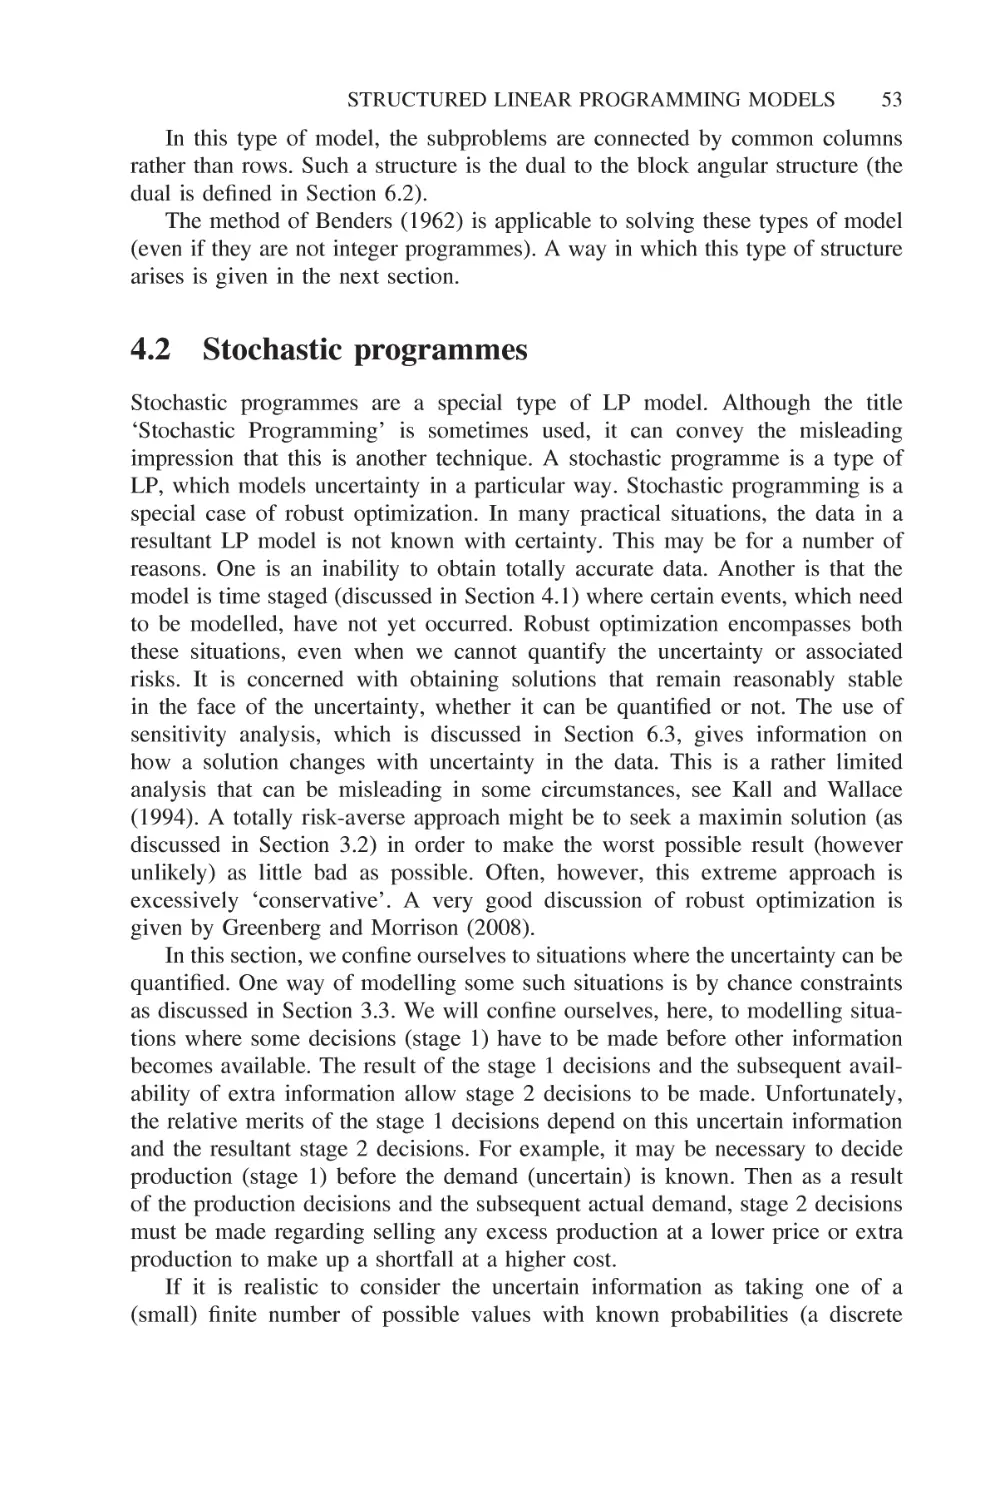 4.2 Stochastic programmes